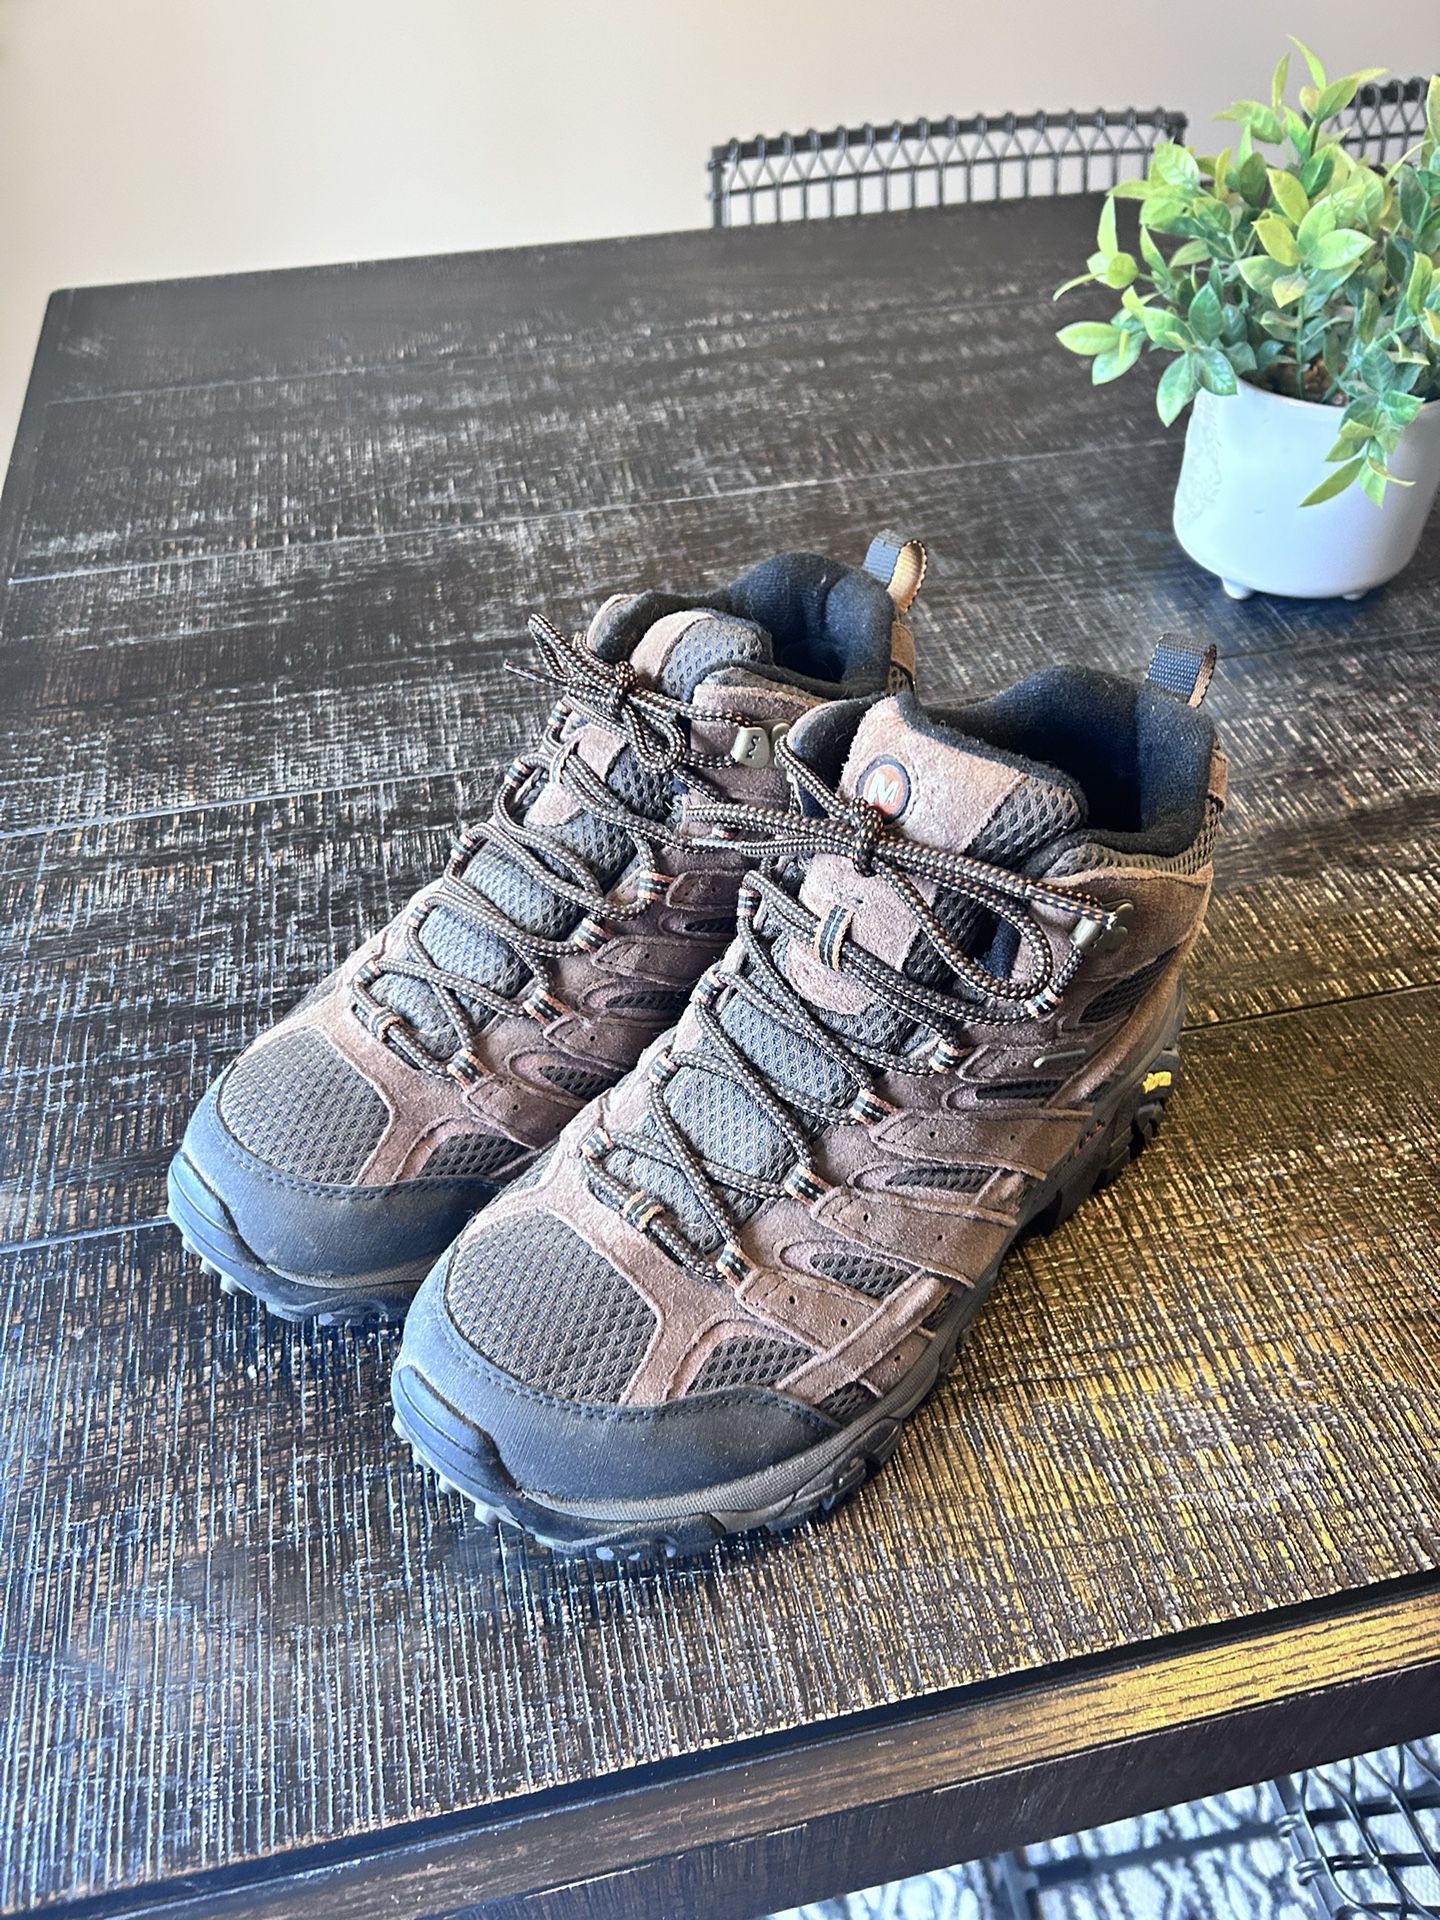 Merrell Men's Moab 2 Waterproof Mid Hiking Boots - Earth